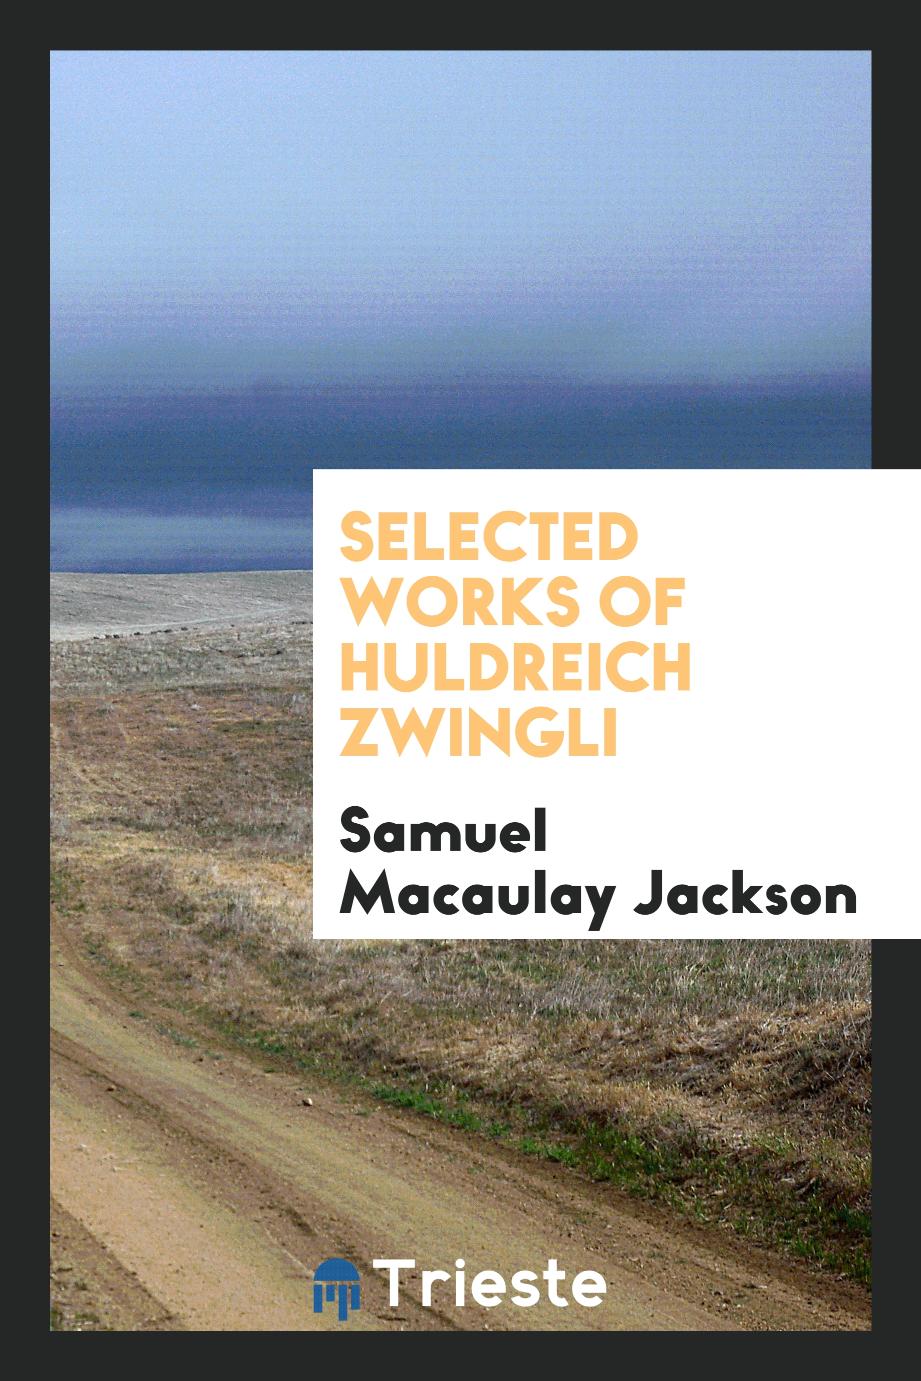 Samuel Macaulay Jackson - Selected works of Huldreich Zwingli